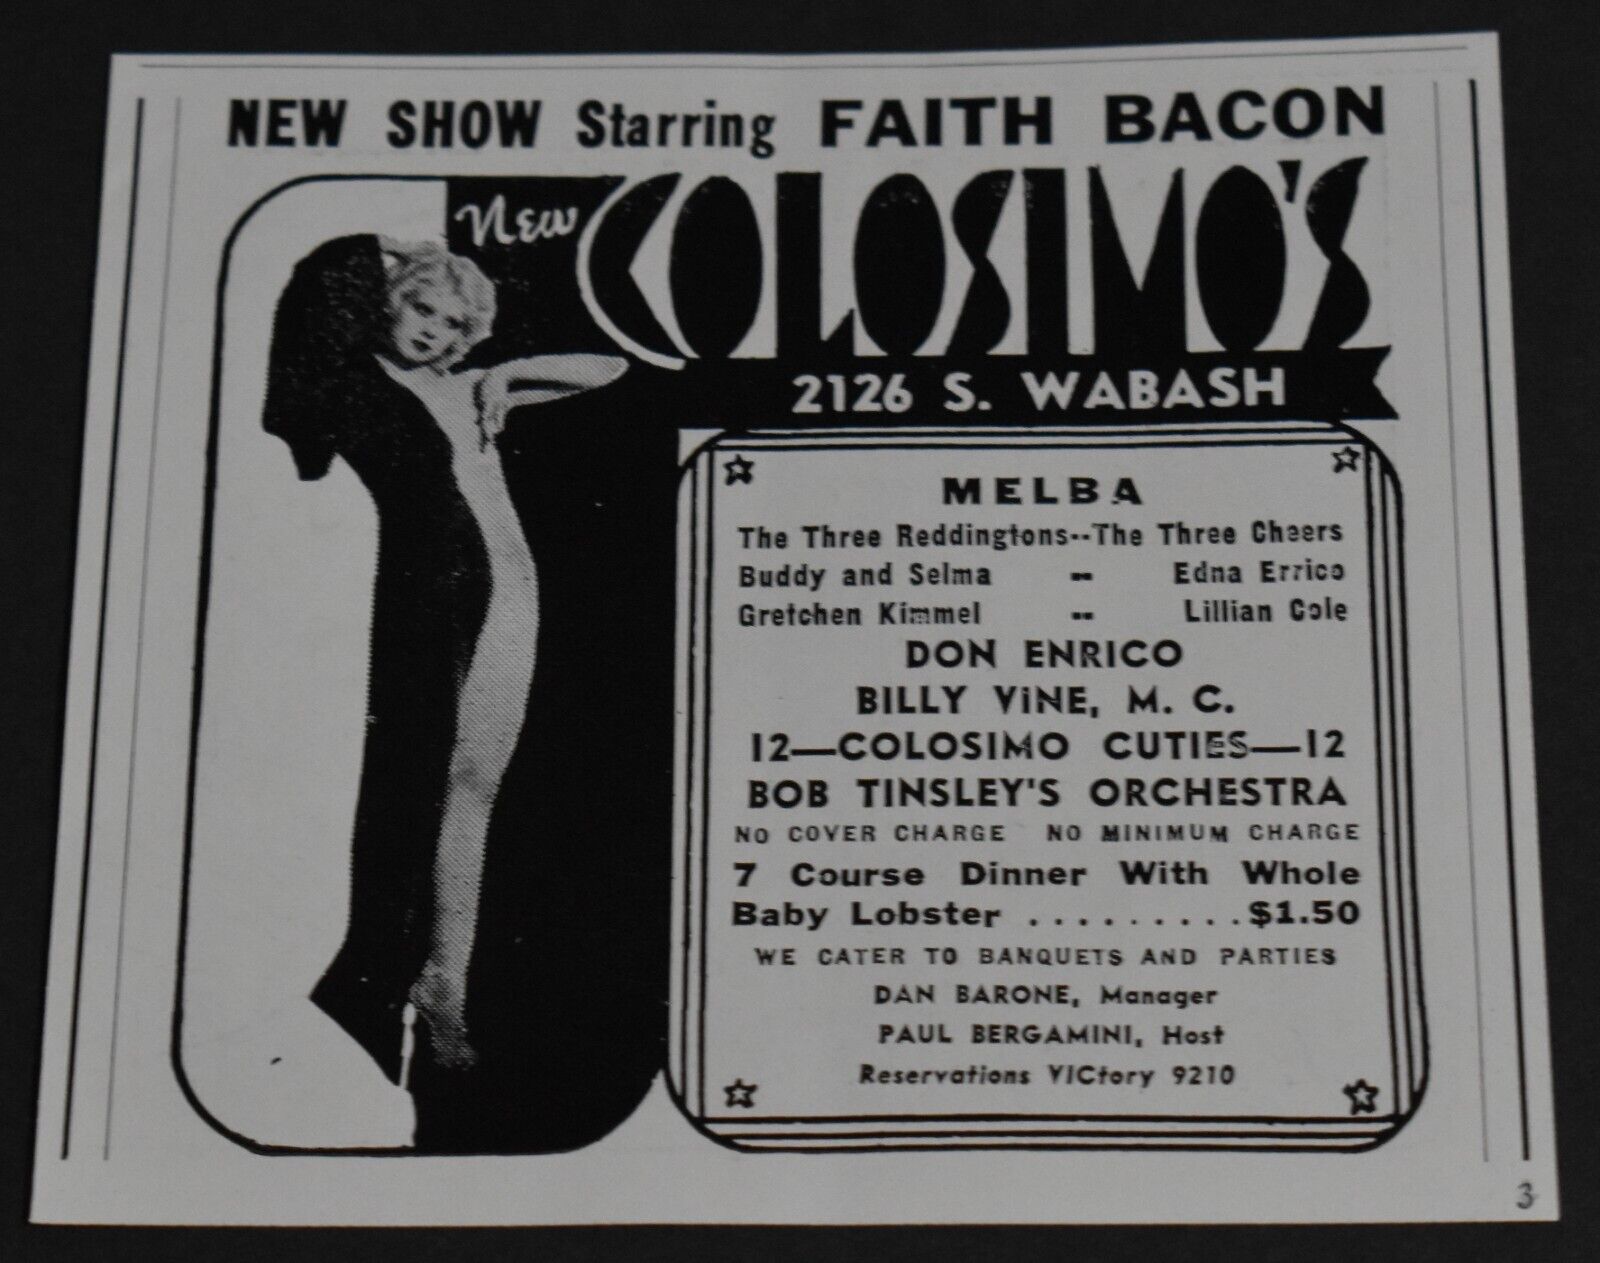 1937 Print Ad Chicago Colosimo's Al Capone Faith Bacon Billy Vine Big Jim Art